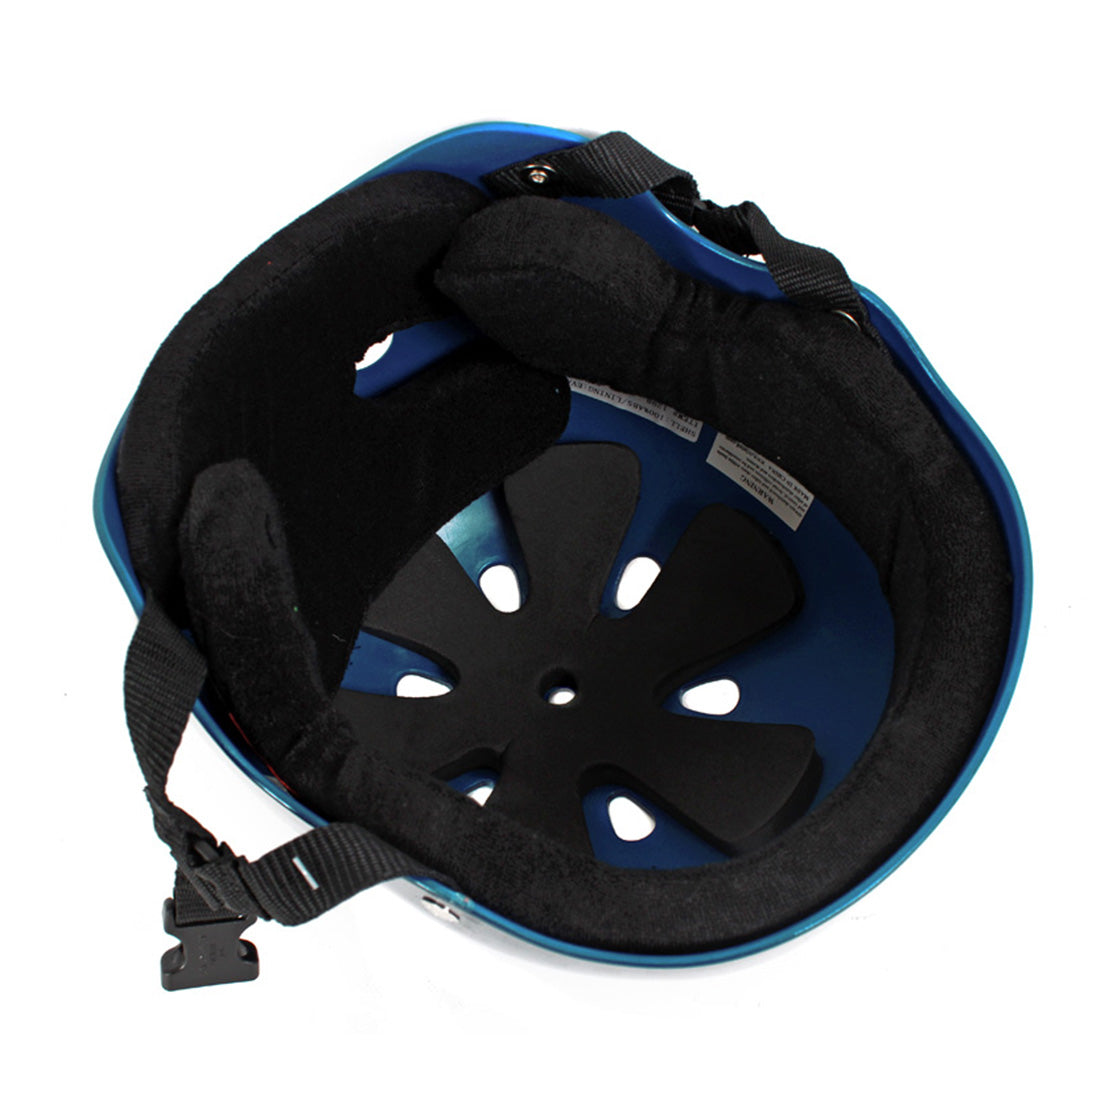 Triple 8 Skate SS Helmet - Blue Metallic Gloss Helmets